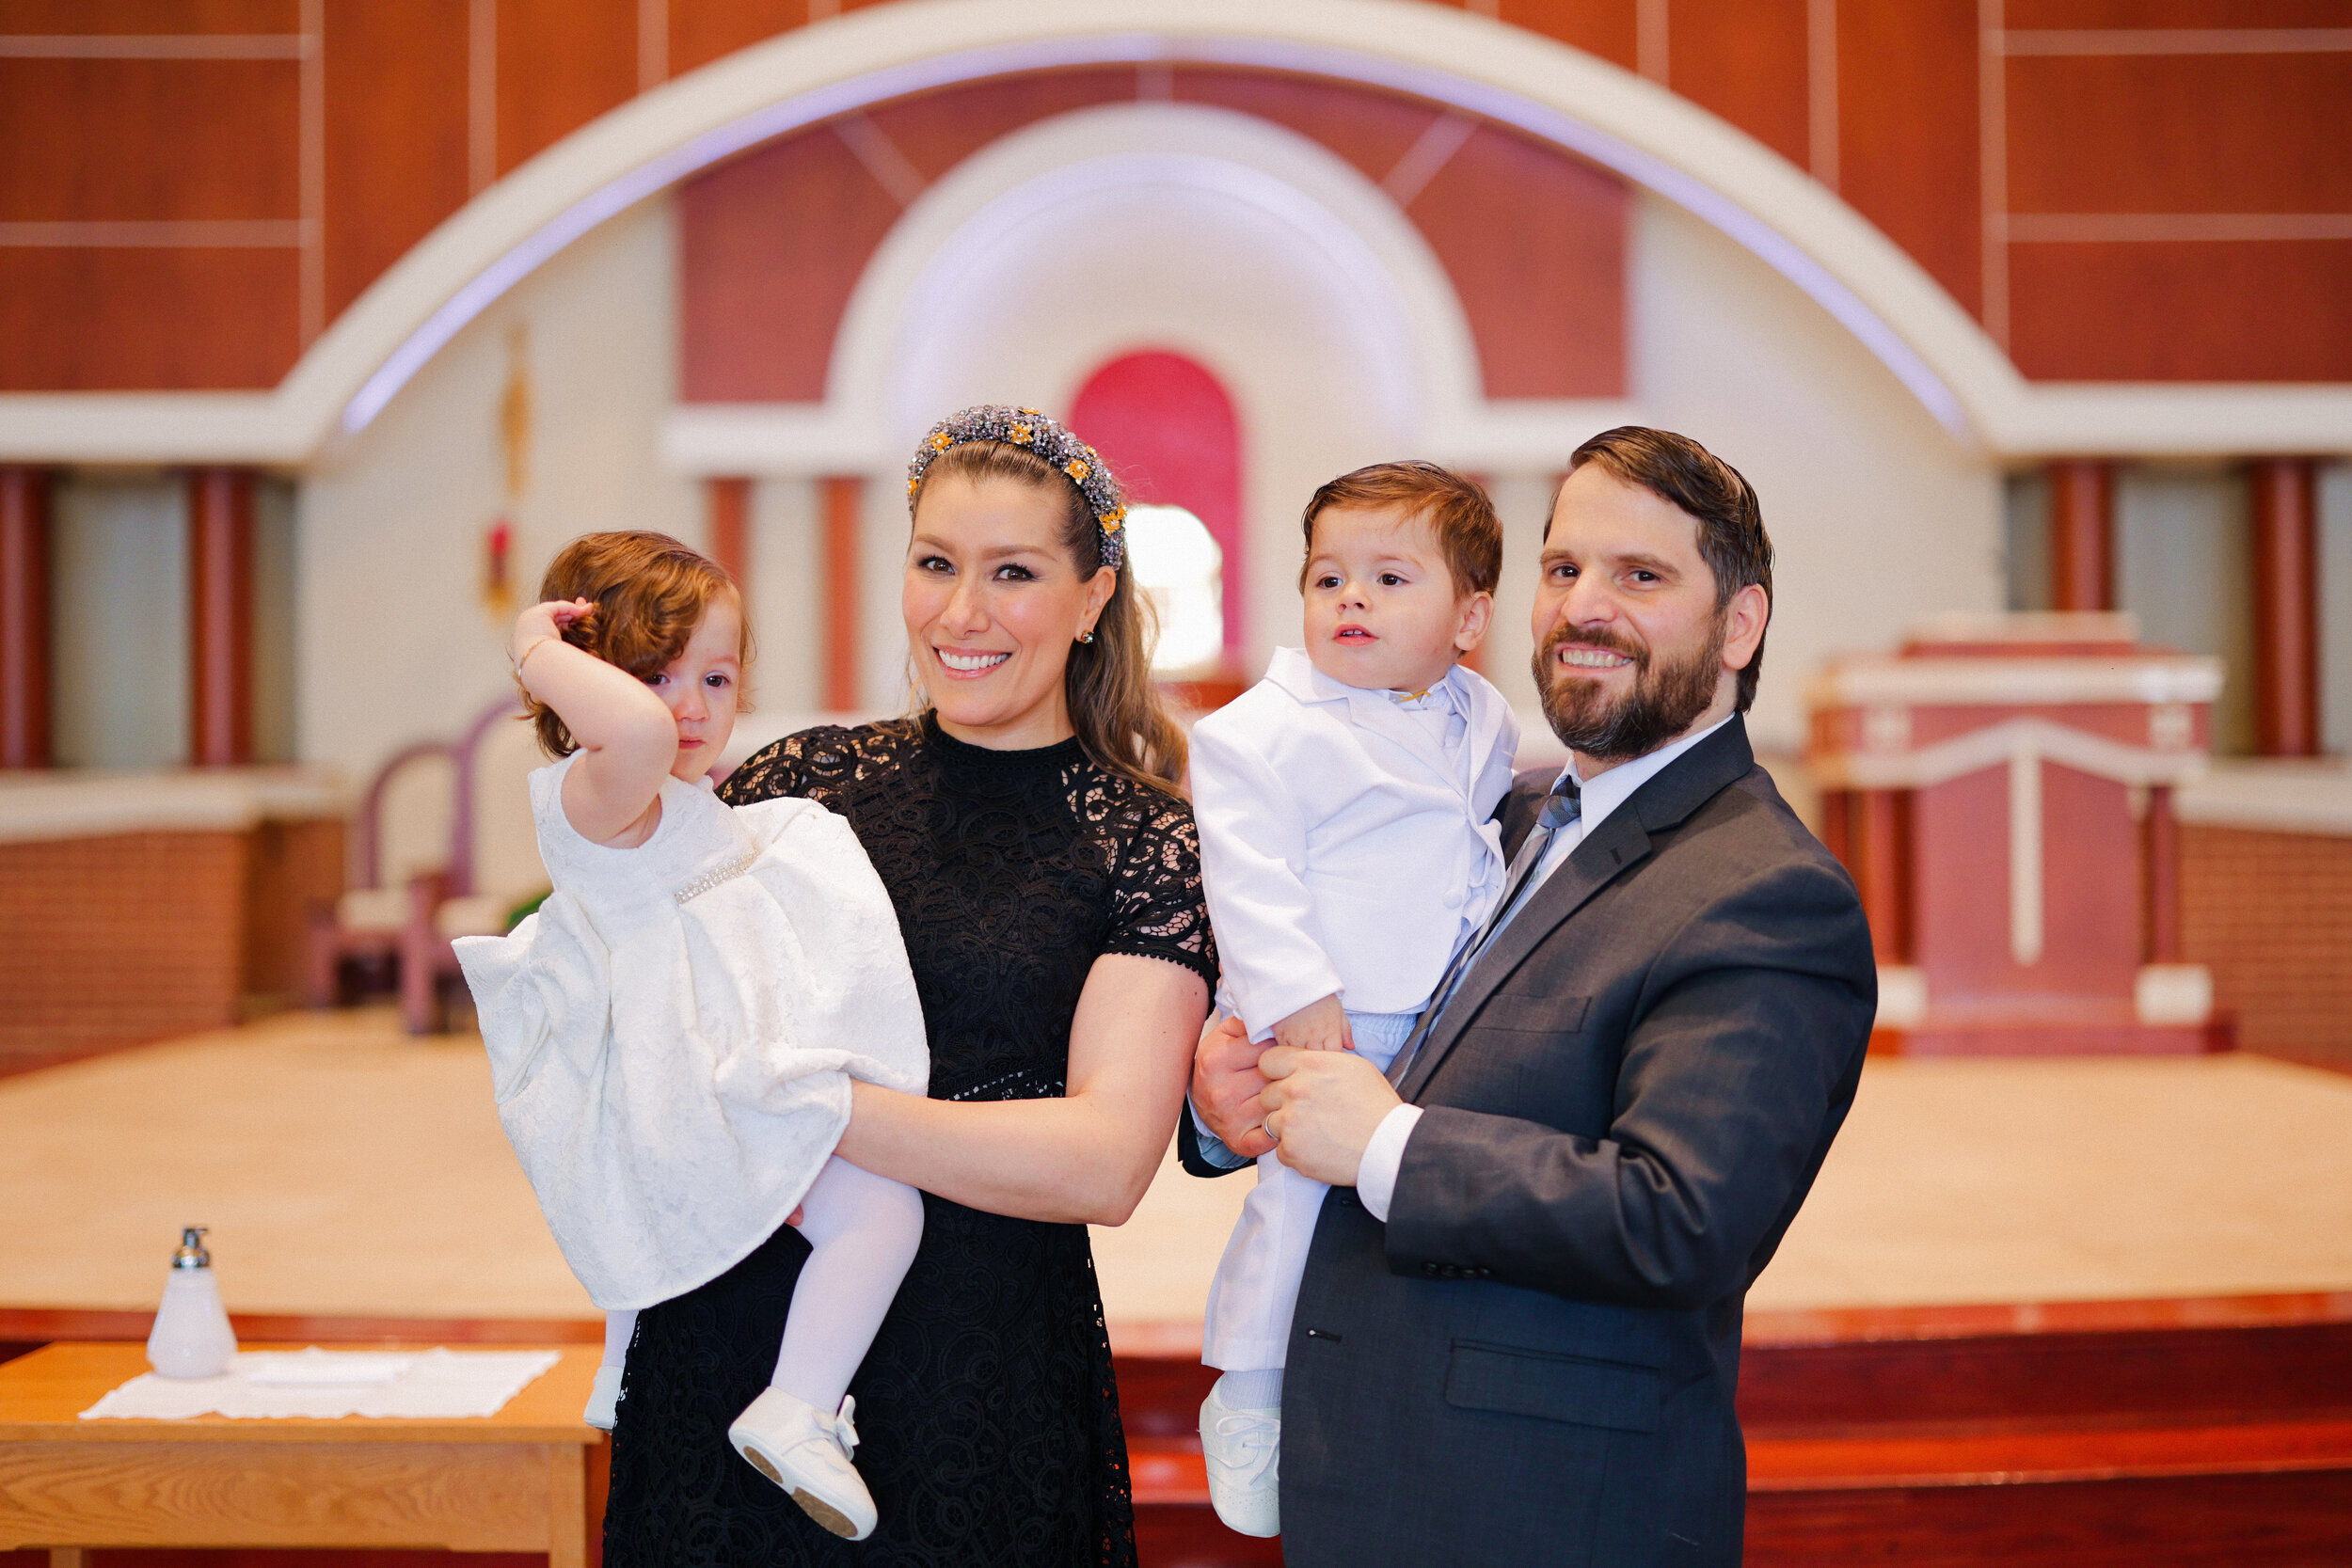 Manassas Virginia Child Baptism - Family Photography90.jpg